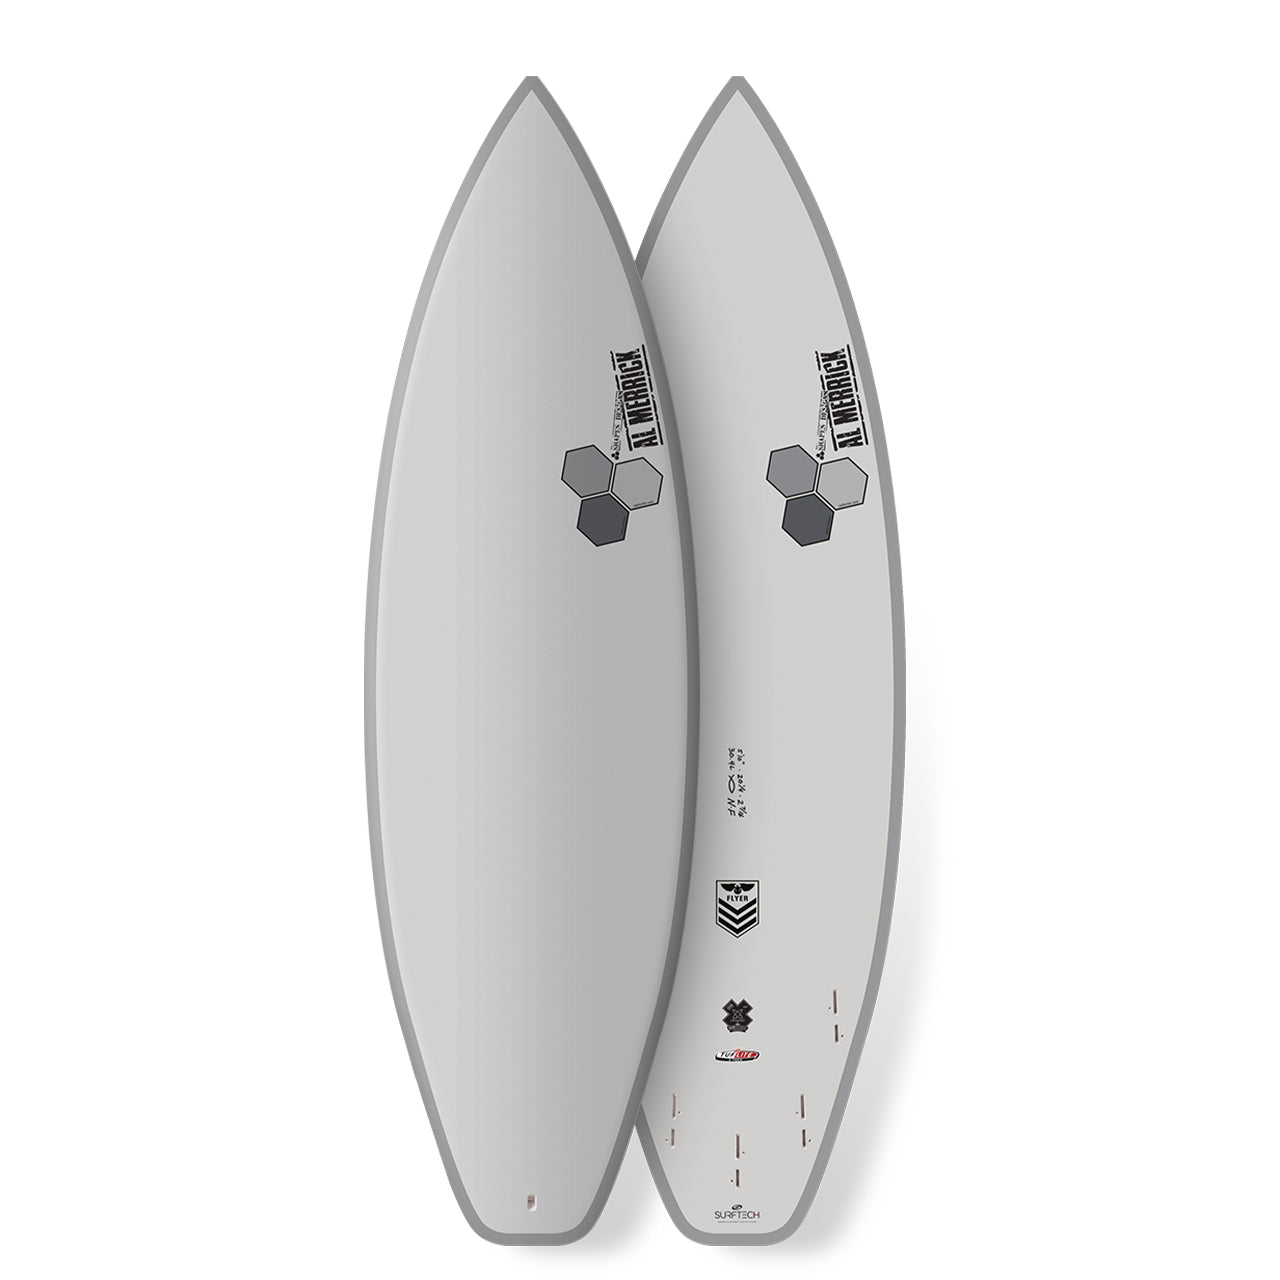 Surftech x Channel Islands - New Flyer Surfboard